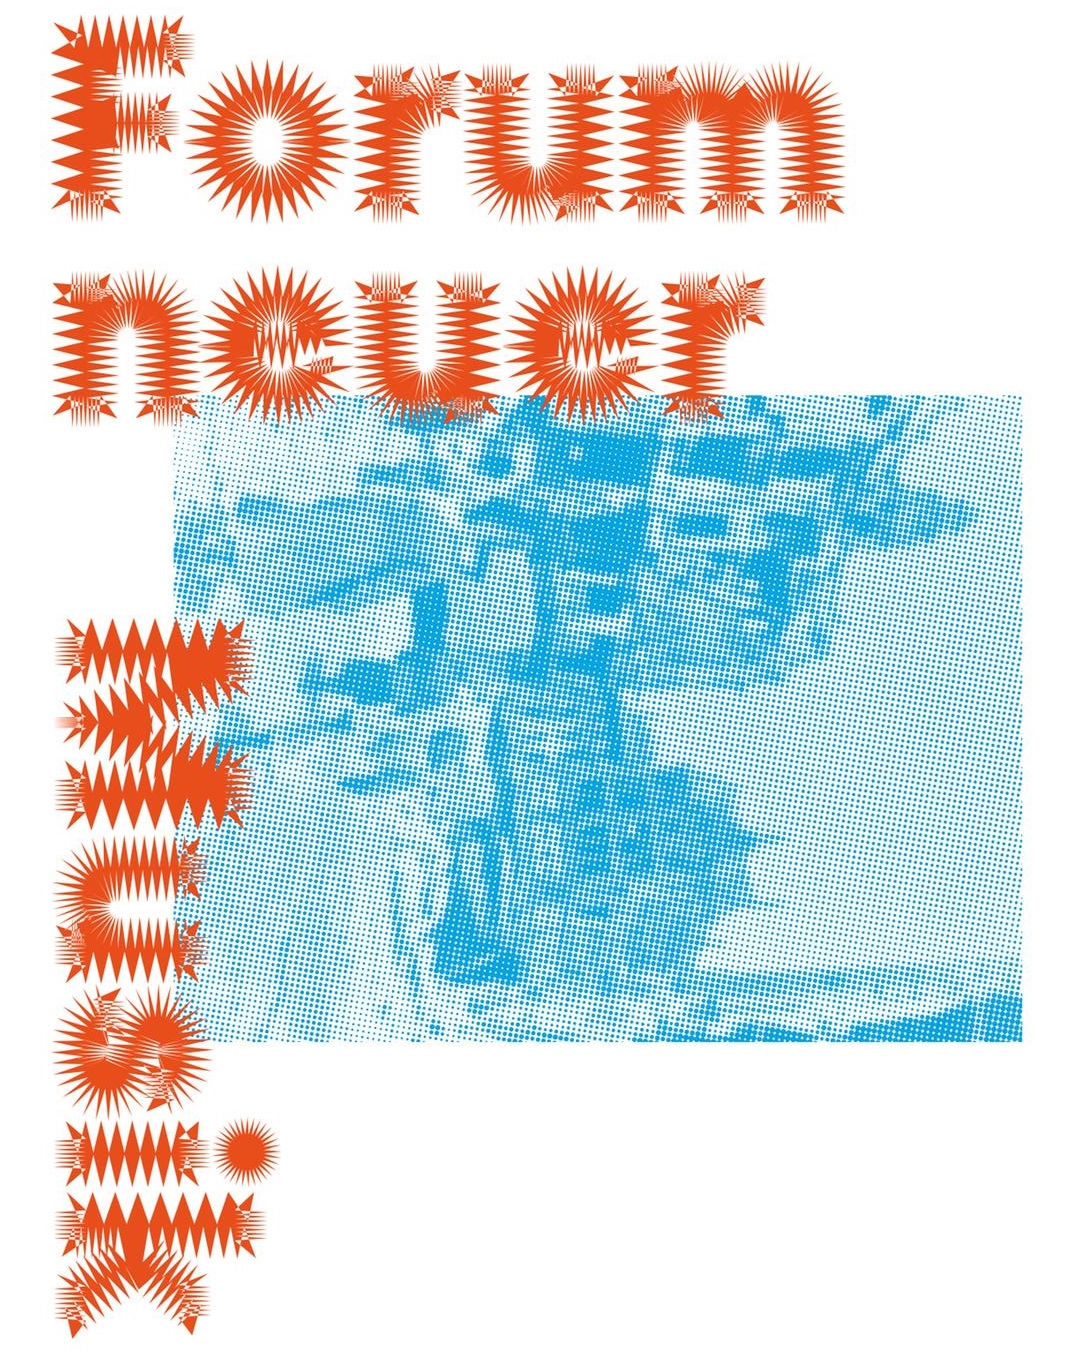 forum-neuer-musik-2023-key-100-1920x1080.jpg